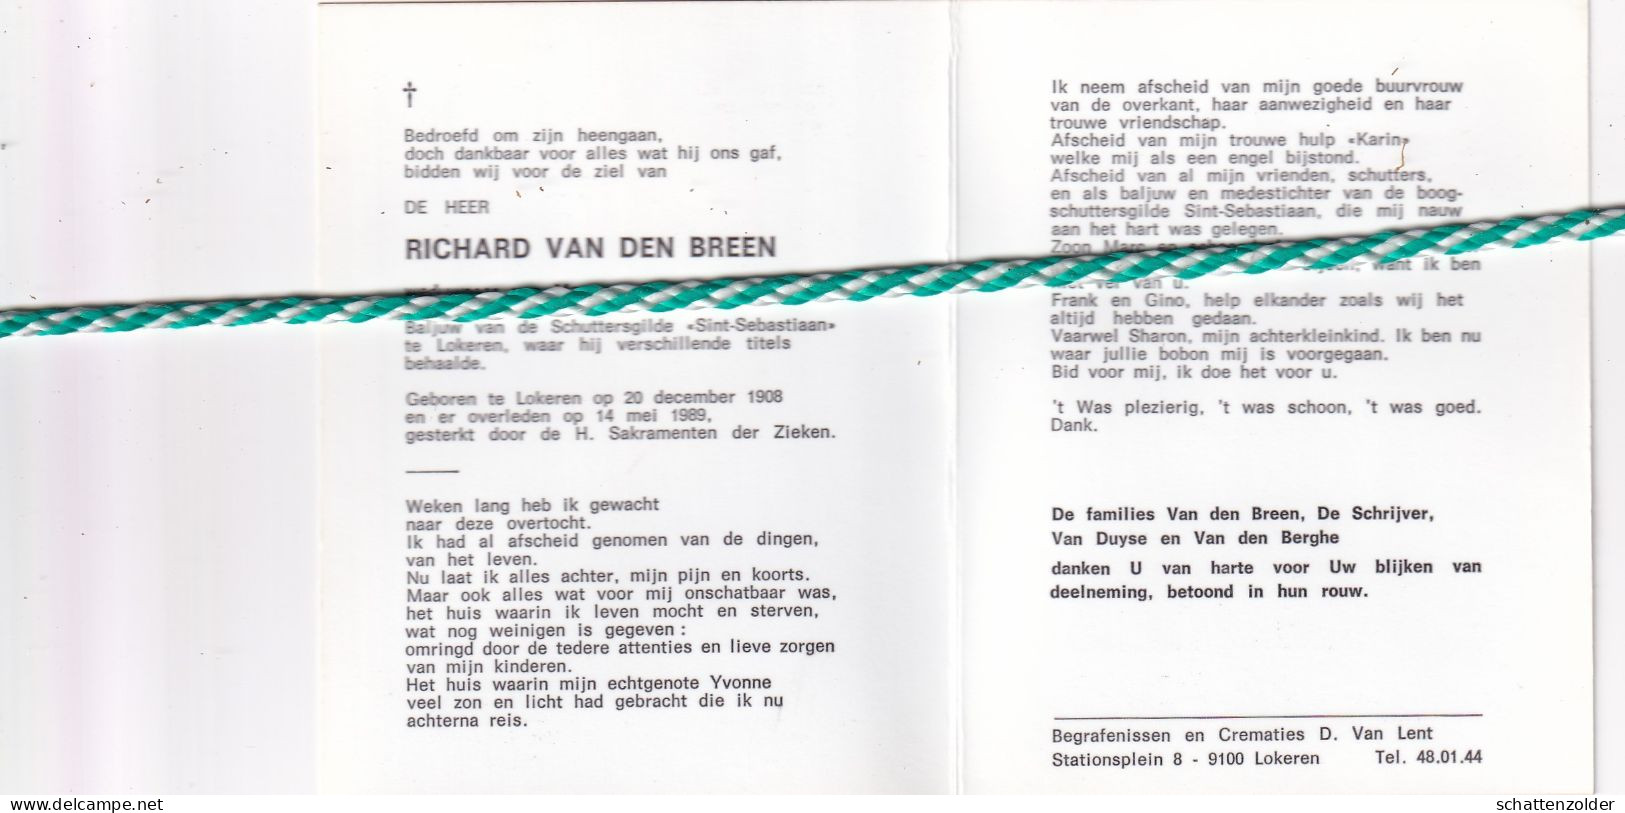 Richard Van Den Breen-De Schrijver, Lokeren 1908, 1989. Foto Baljuw Schuttersgilde "Sint-Sebastiaan" - Avvisi Di Necrologio